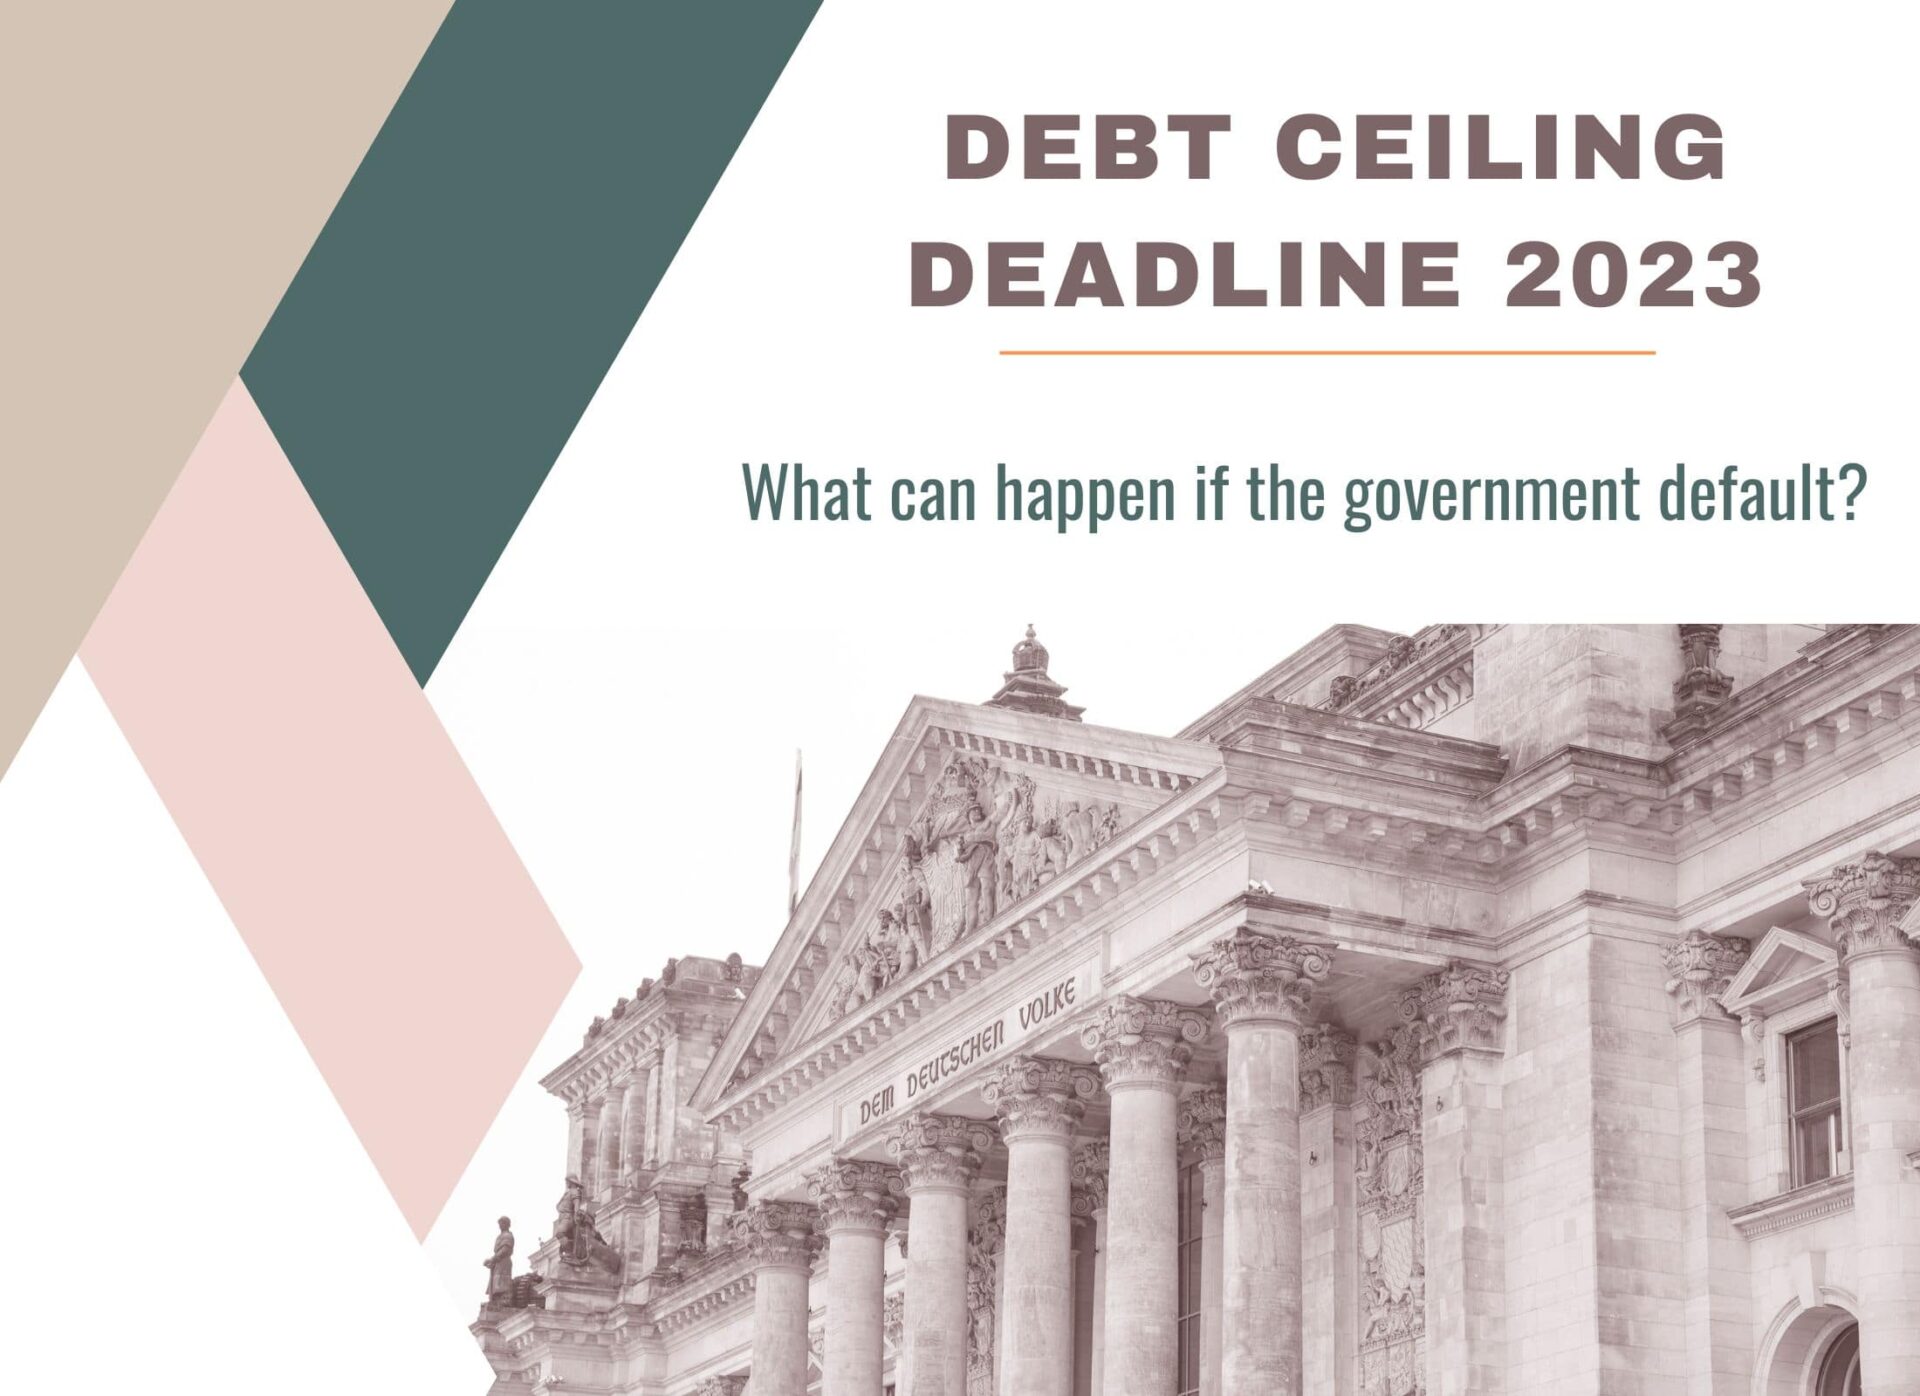 Debt ceiling deadline 2023 ISaveFuture